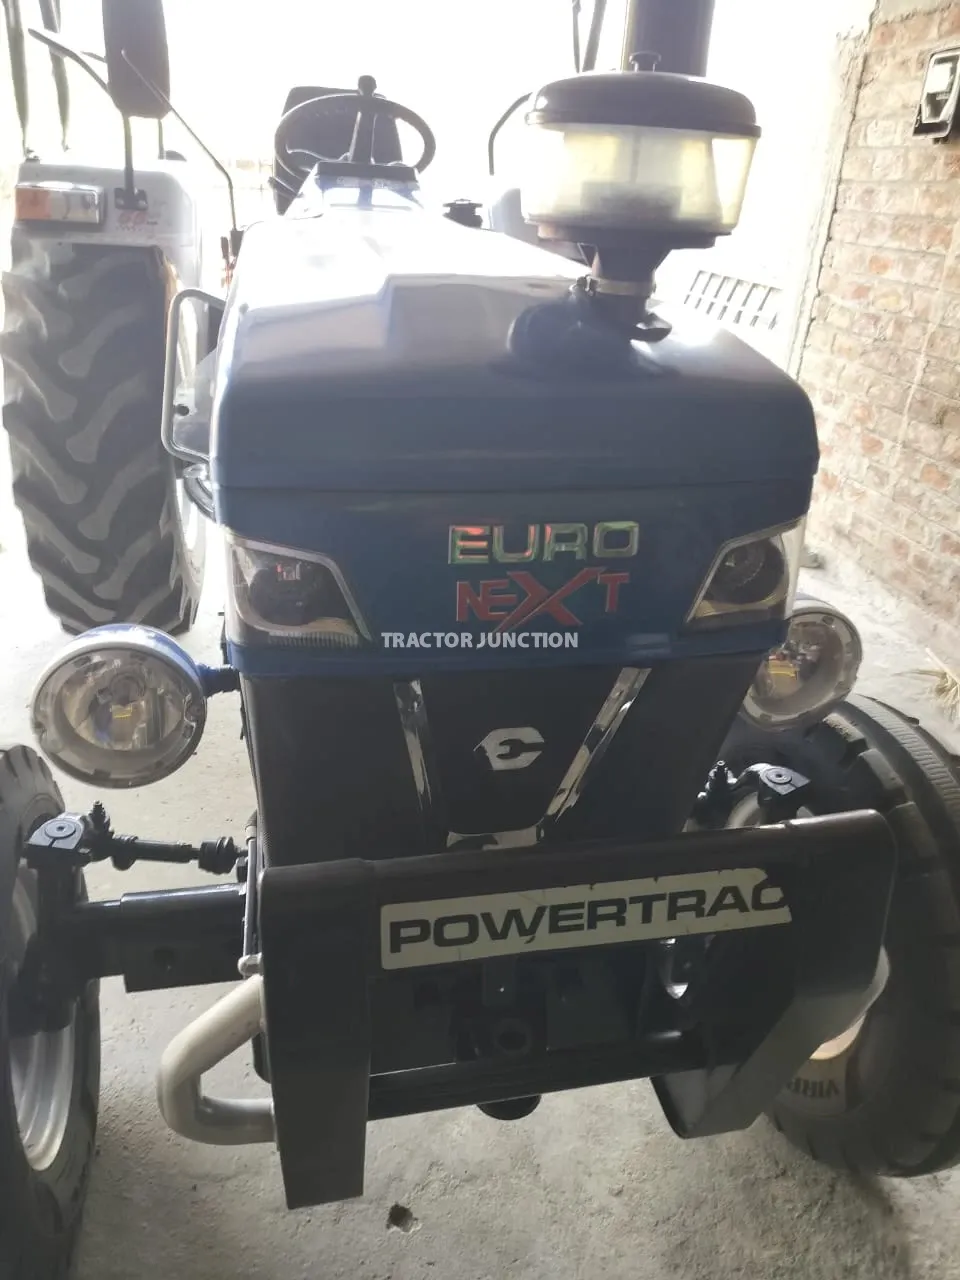 Powertrac Euro 55 Next